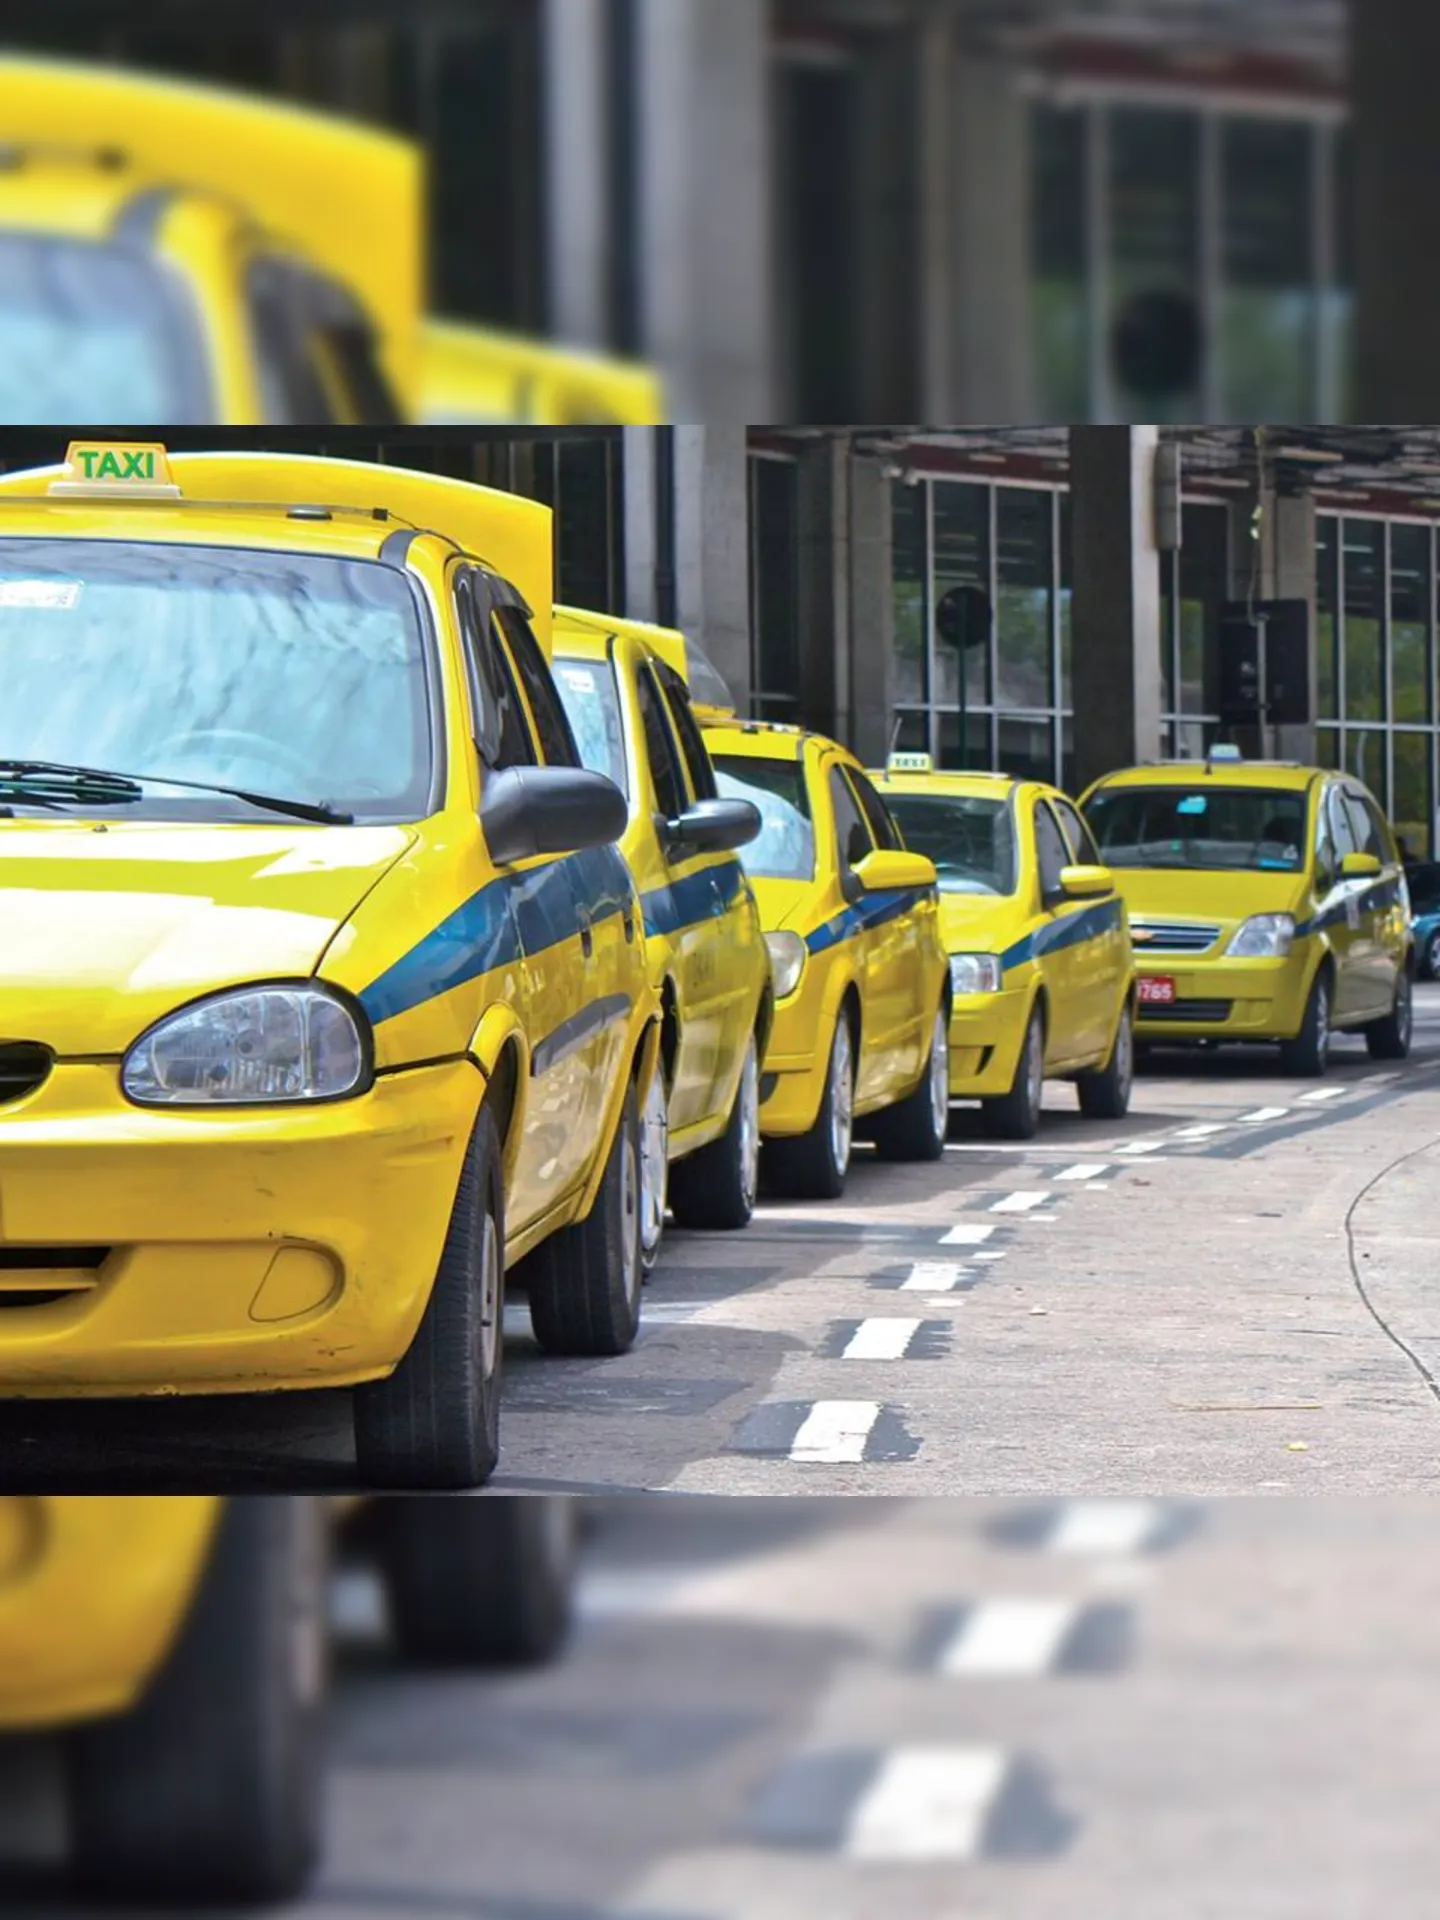 A tarifa dos táxis que circulam pela cidade será reajustada a partir de 1º de janeiro